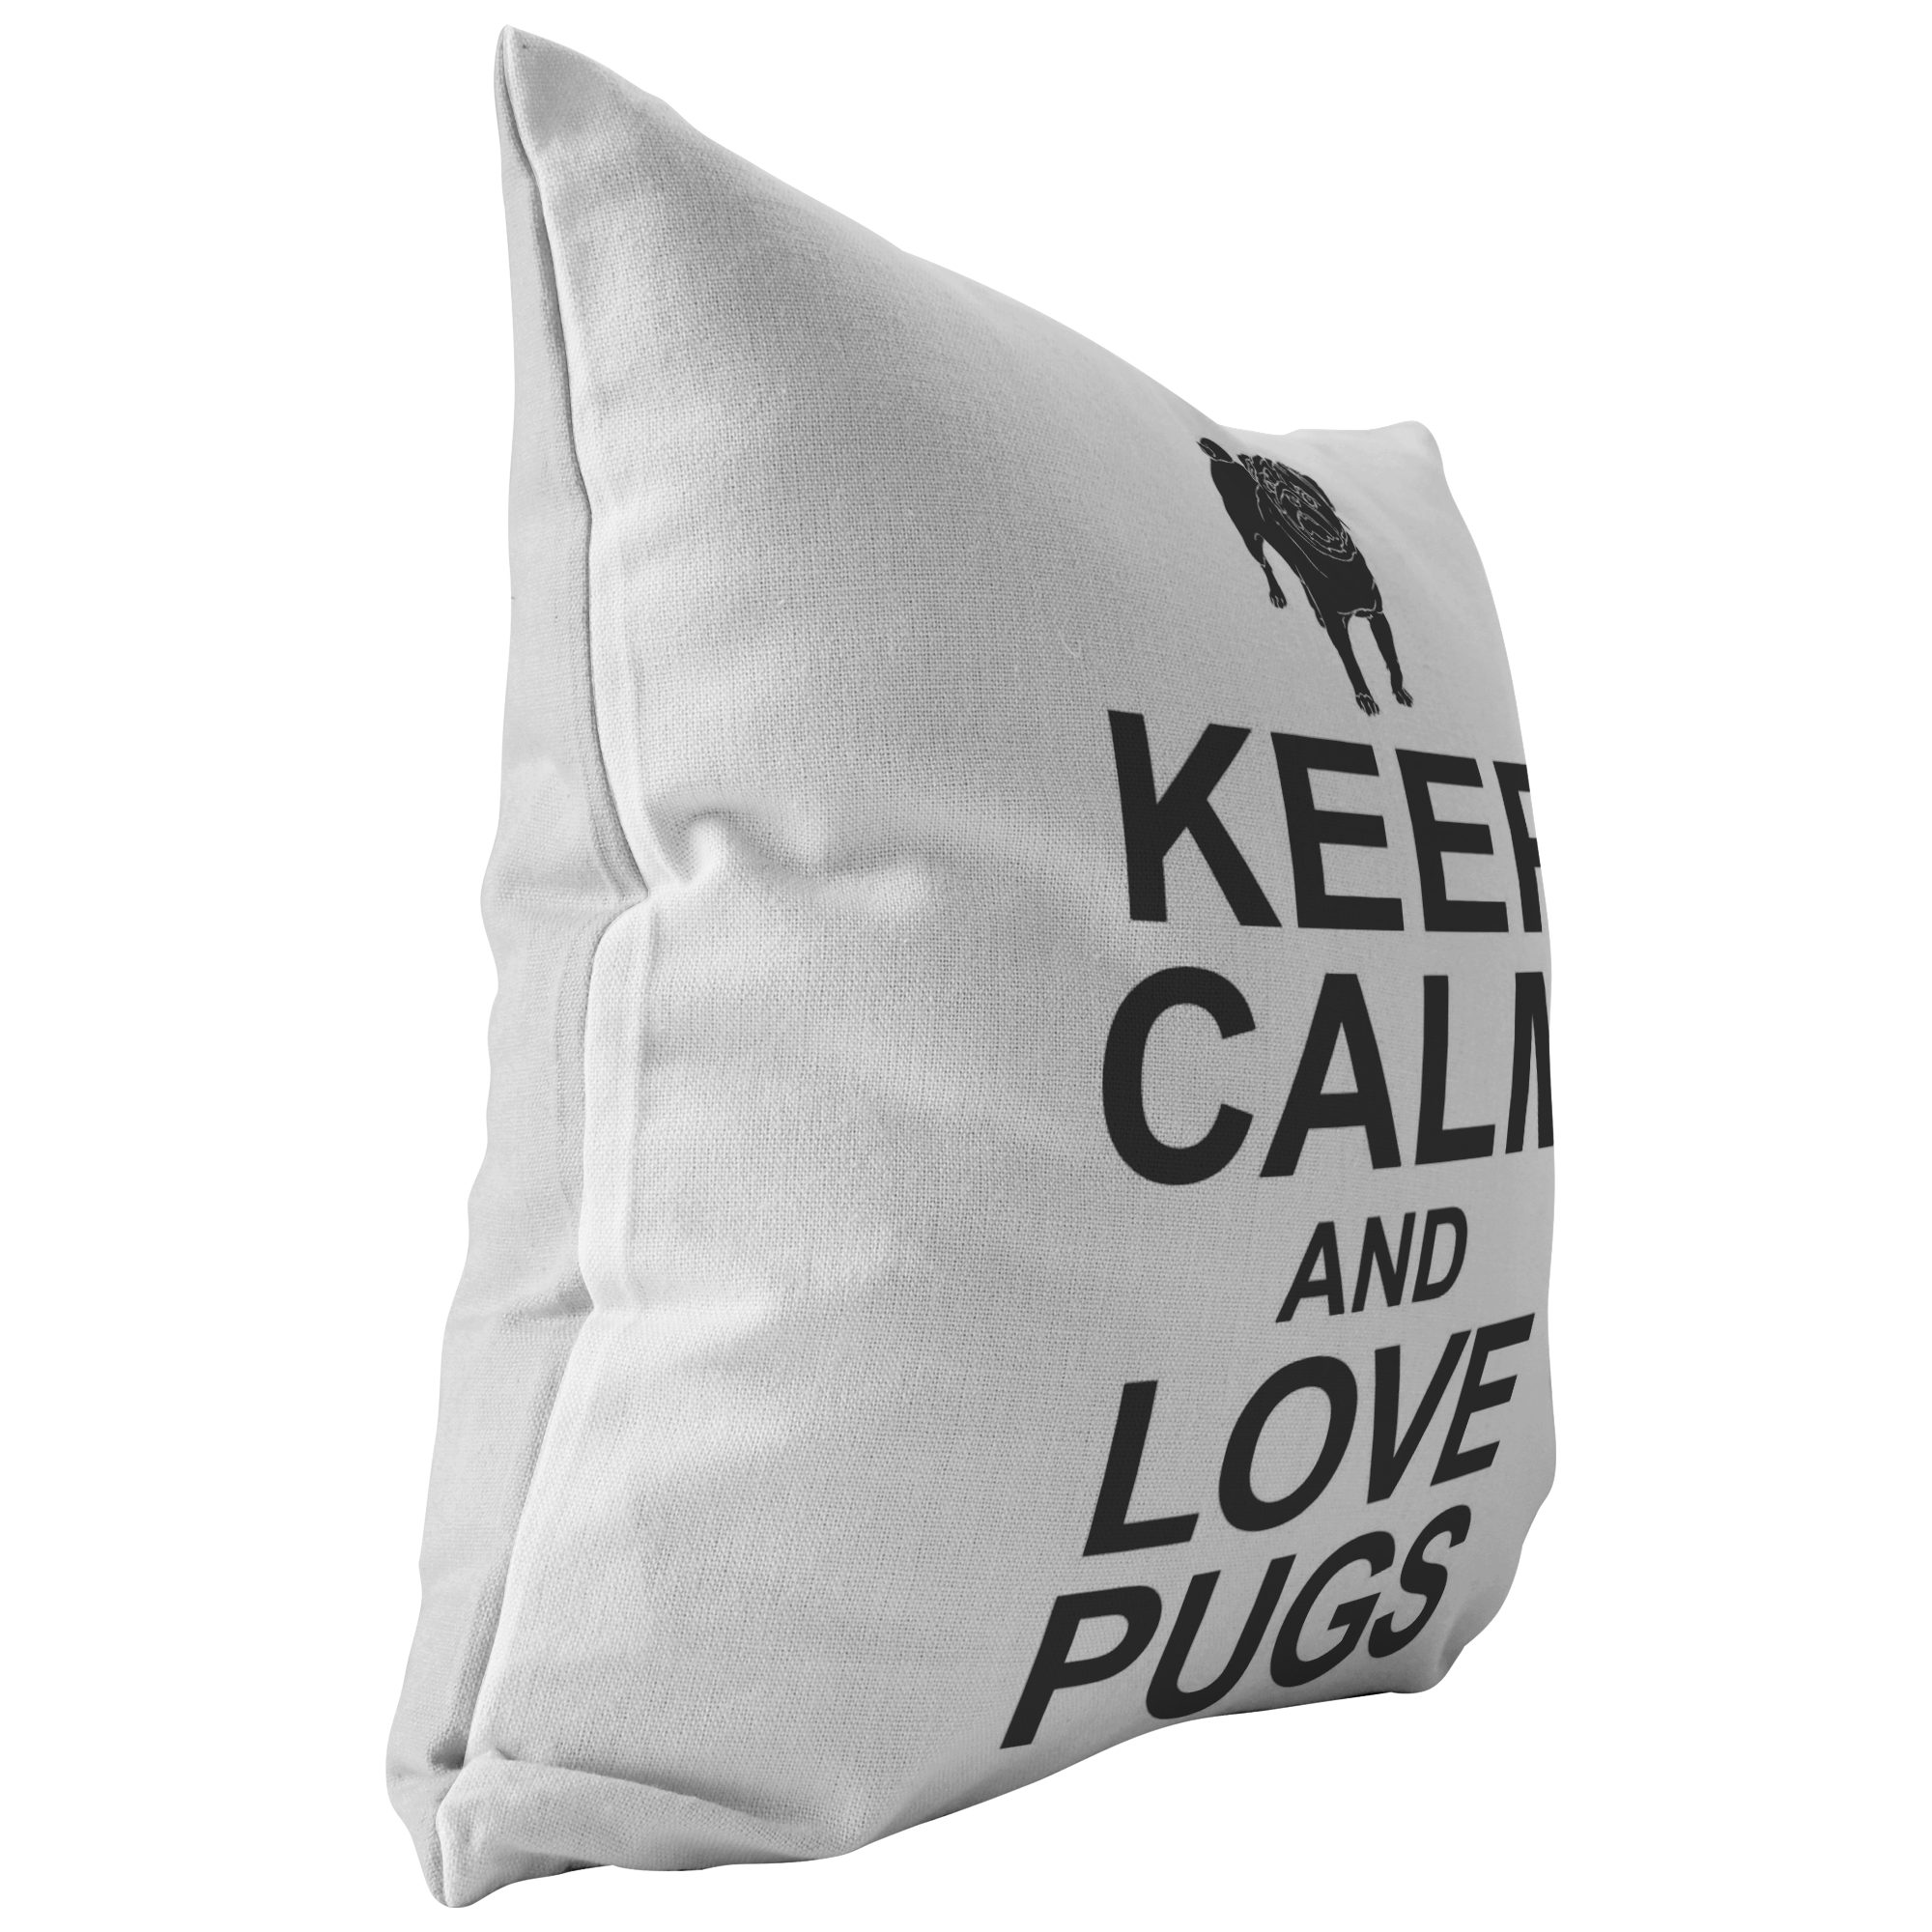 Keep Calm and Love Pugs - Pillow